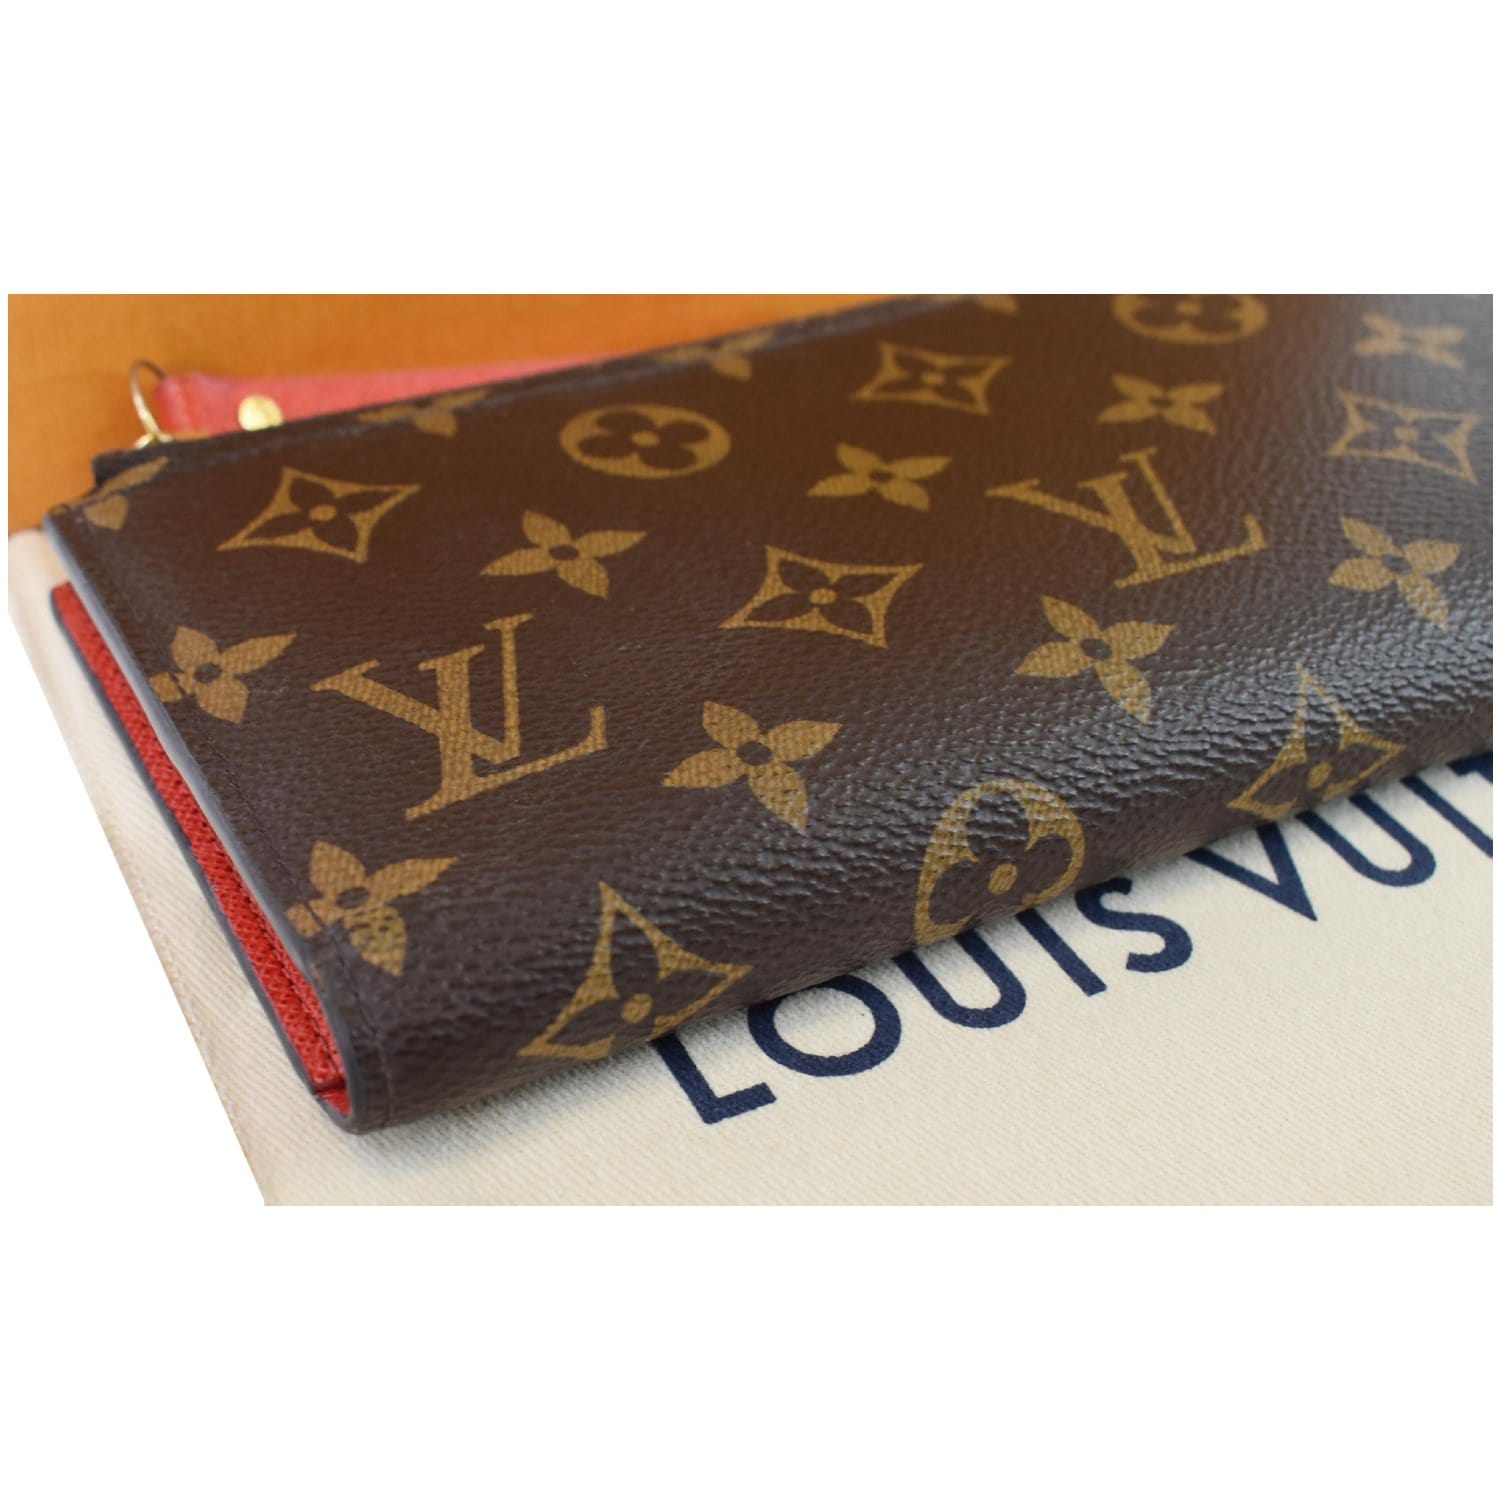 Lot - Louis Vuitton Monogram Adele Wallet